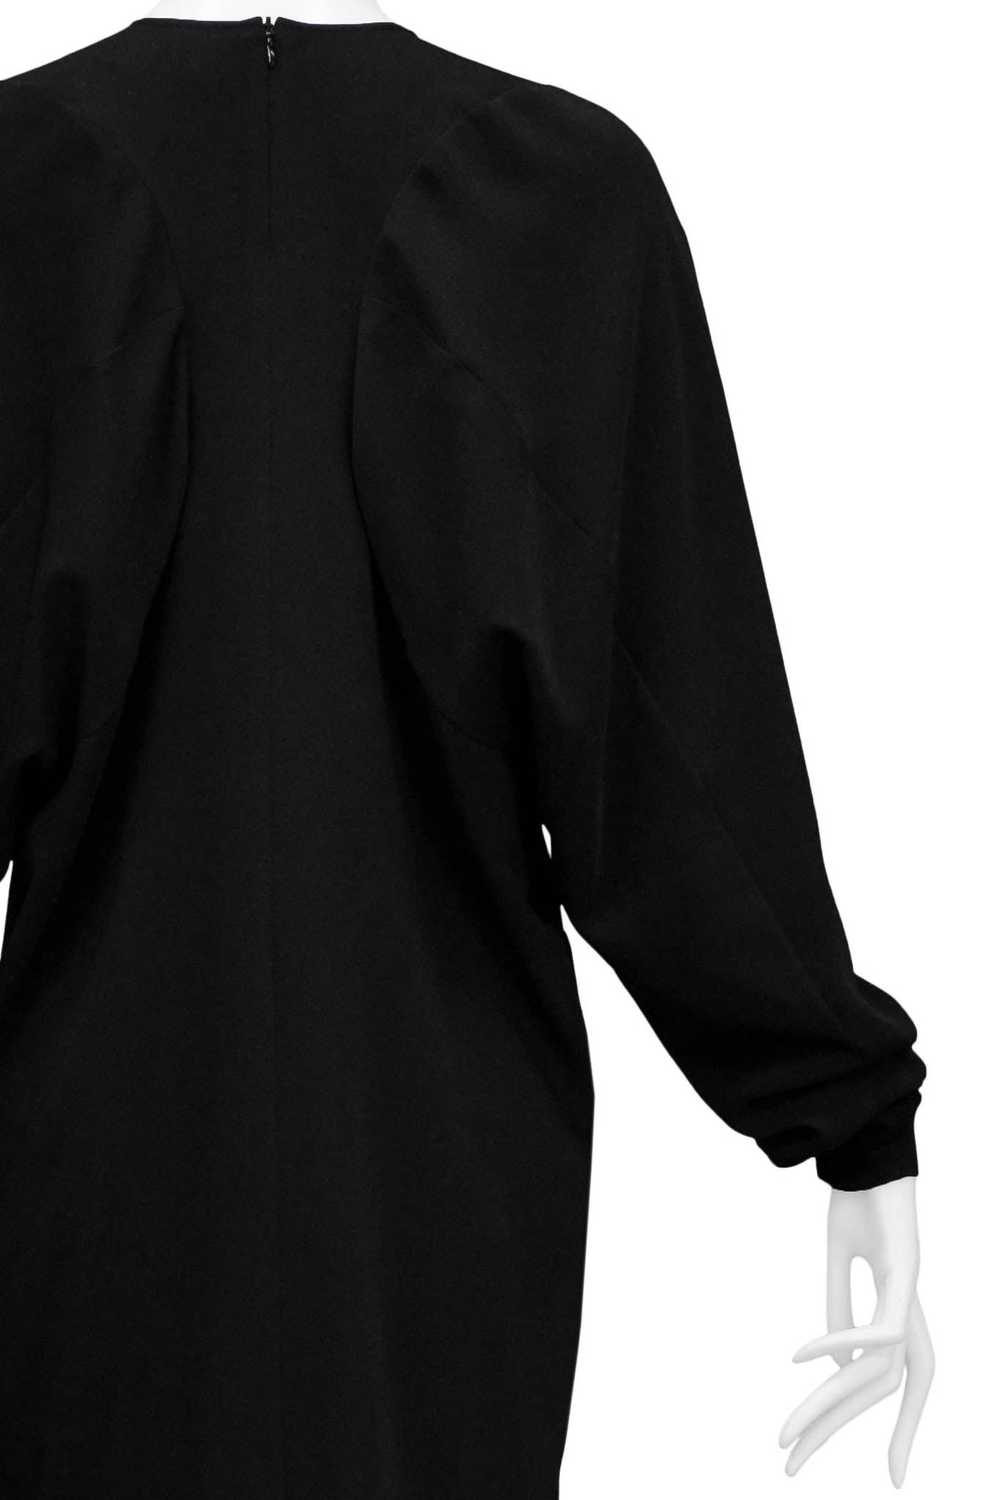 MARGIELA BLACK DRESS WITH LONG DOLMAN SLEEVES - image 6